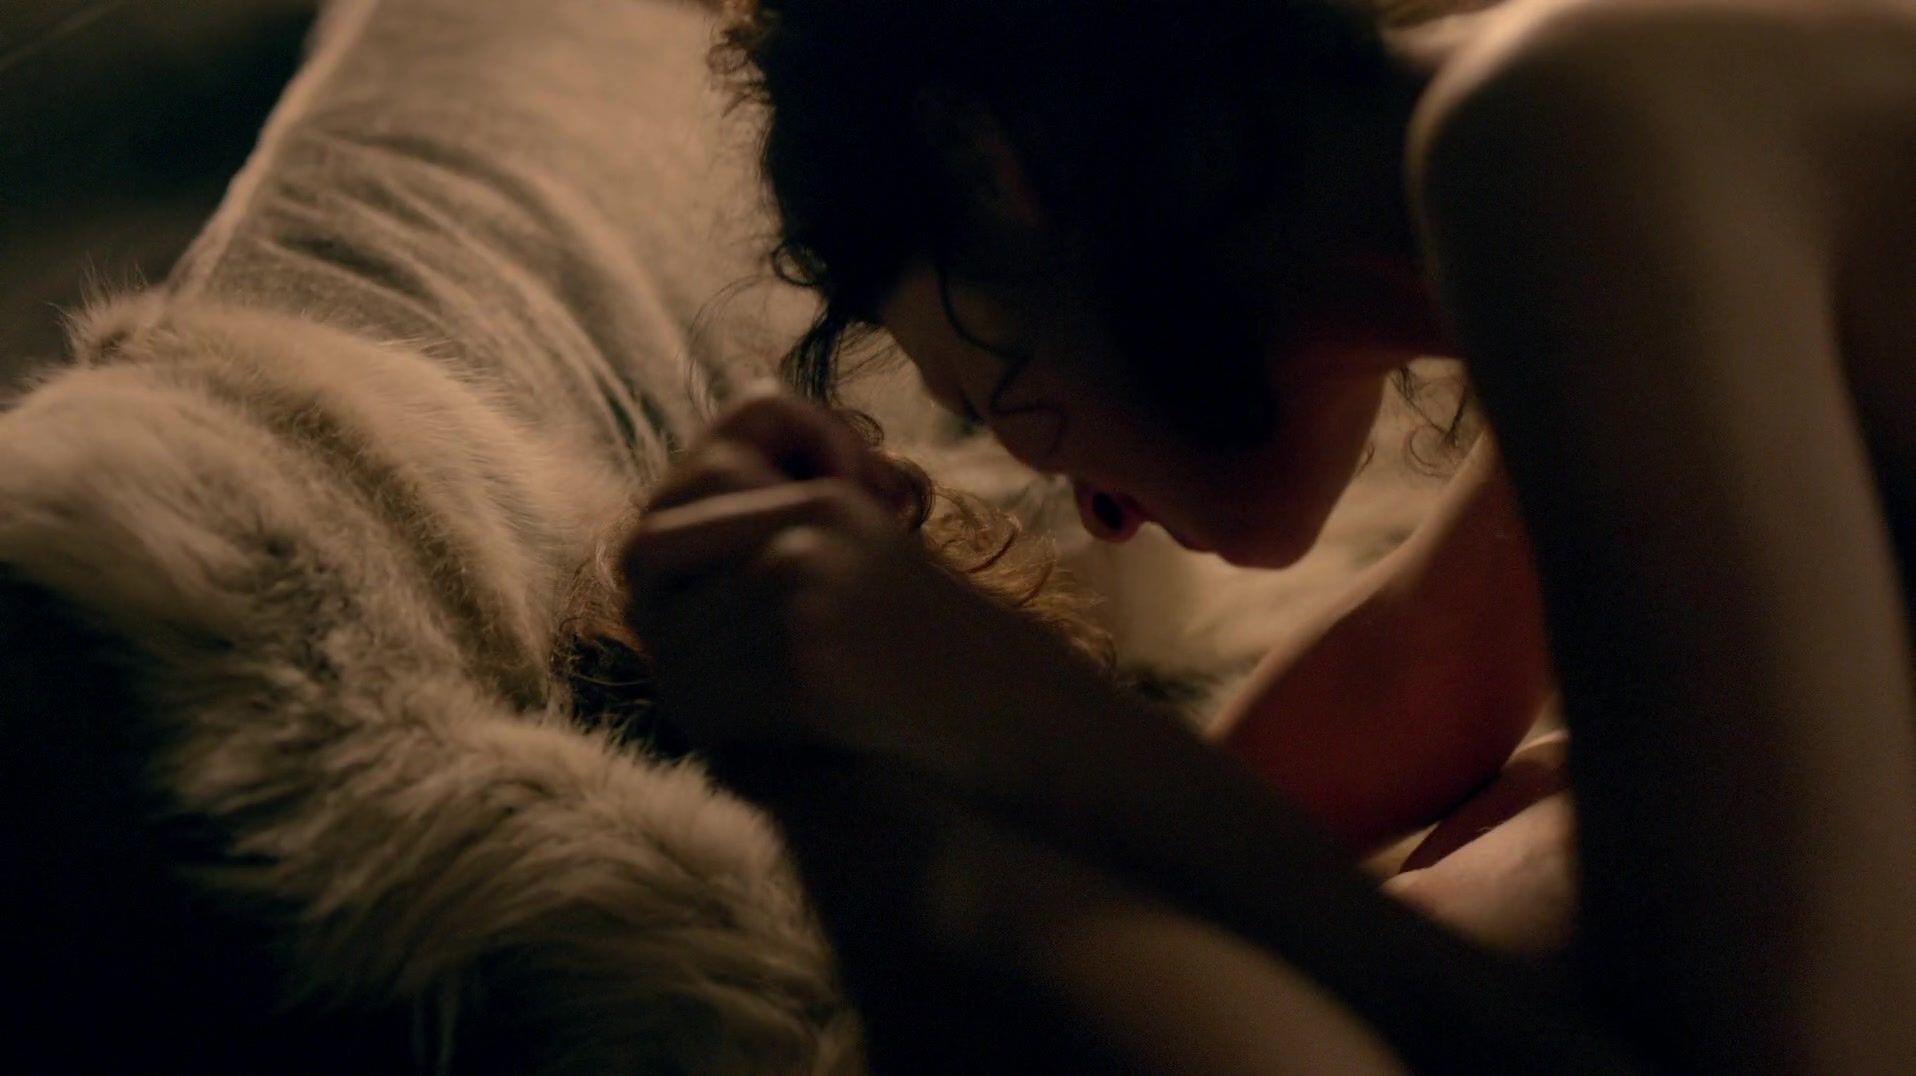 Real Couple Sex scene of naked Caitriona Balfe | TV show "Outlander" XGay